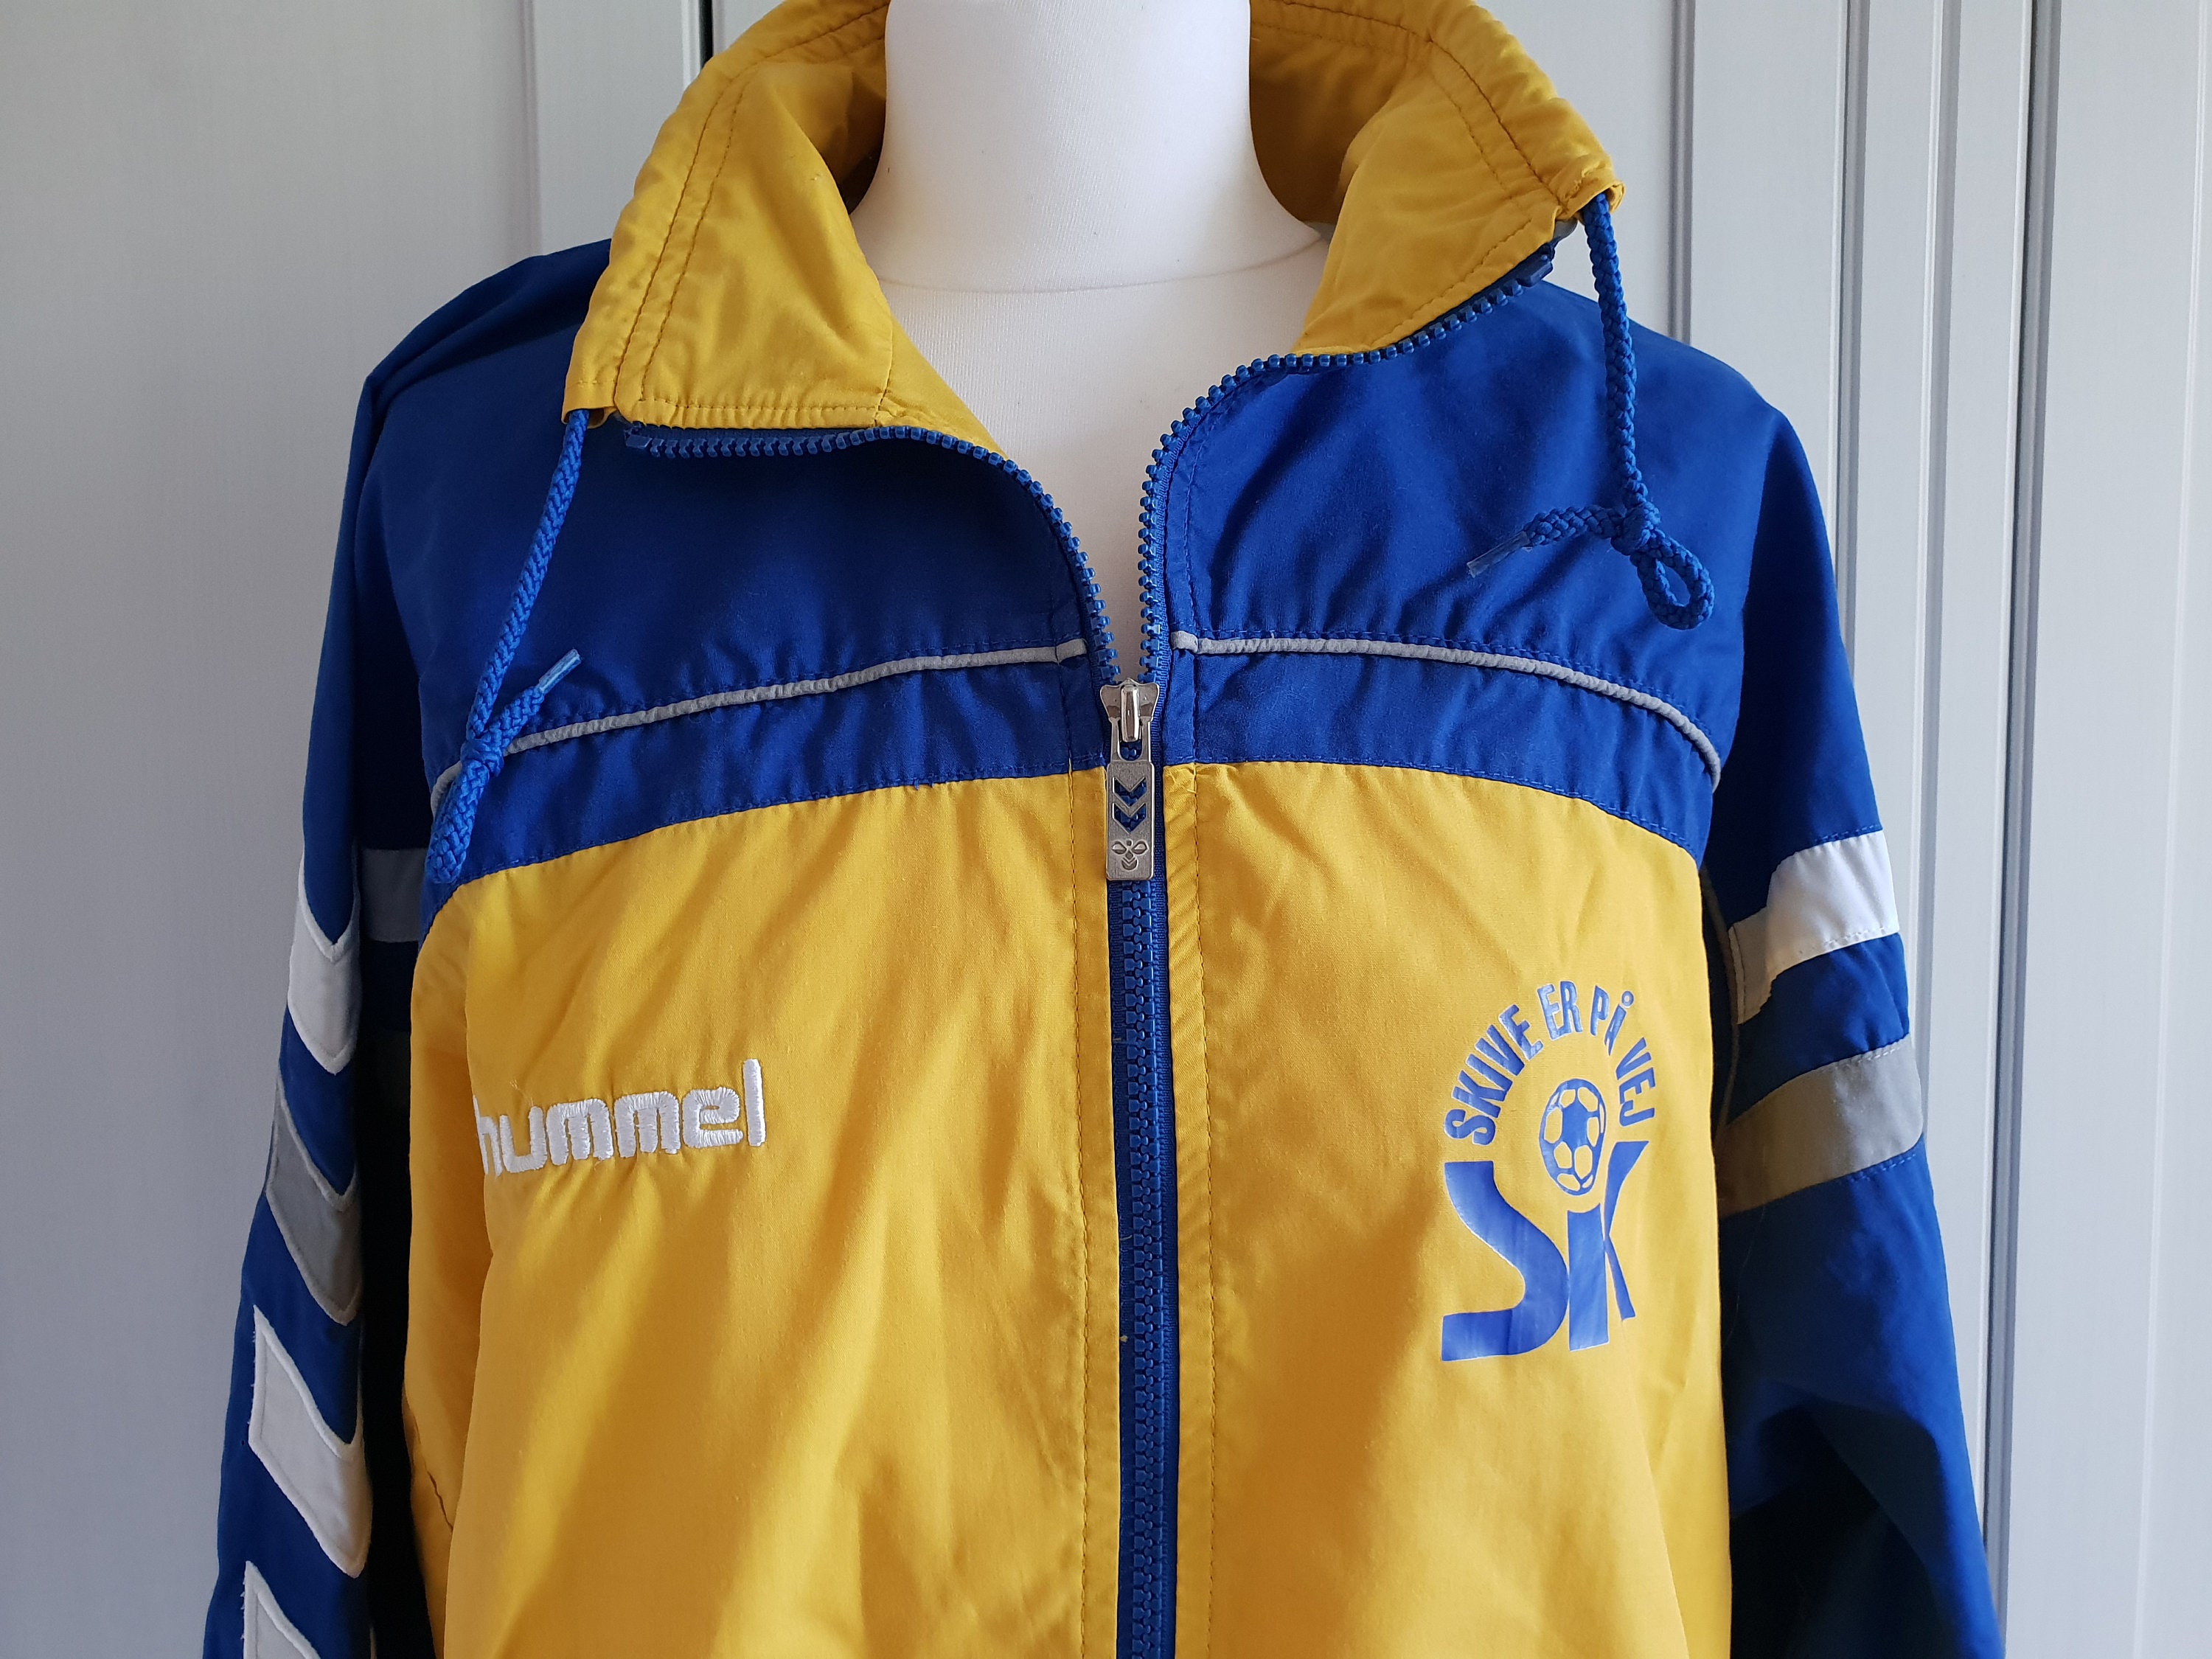 L Blue Men Jacket Etsy - M Vintage Suit / Jacket , Yellow , Hummel Women Track Size White Oldschool ,